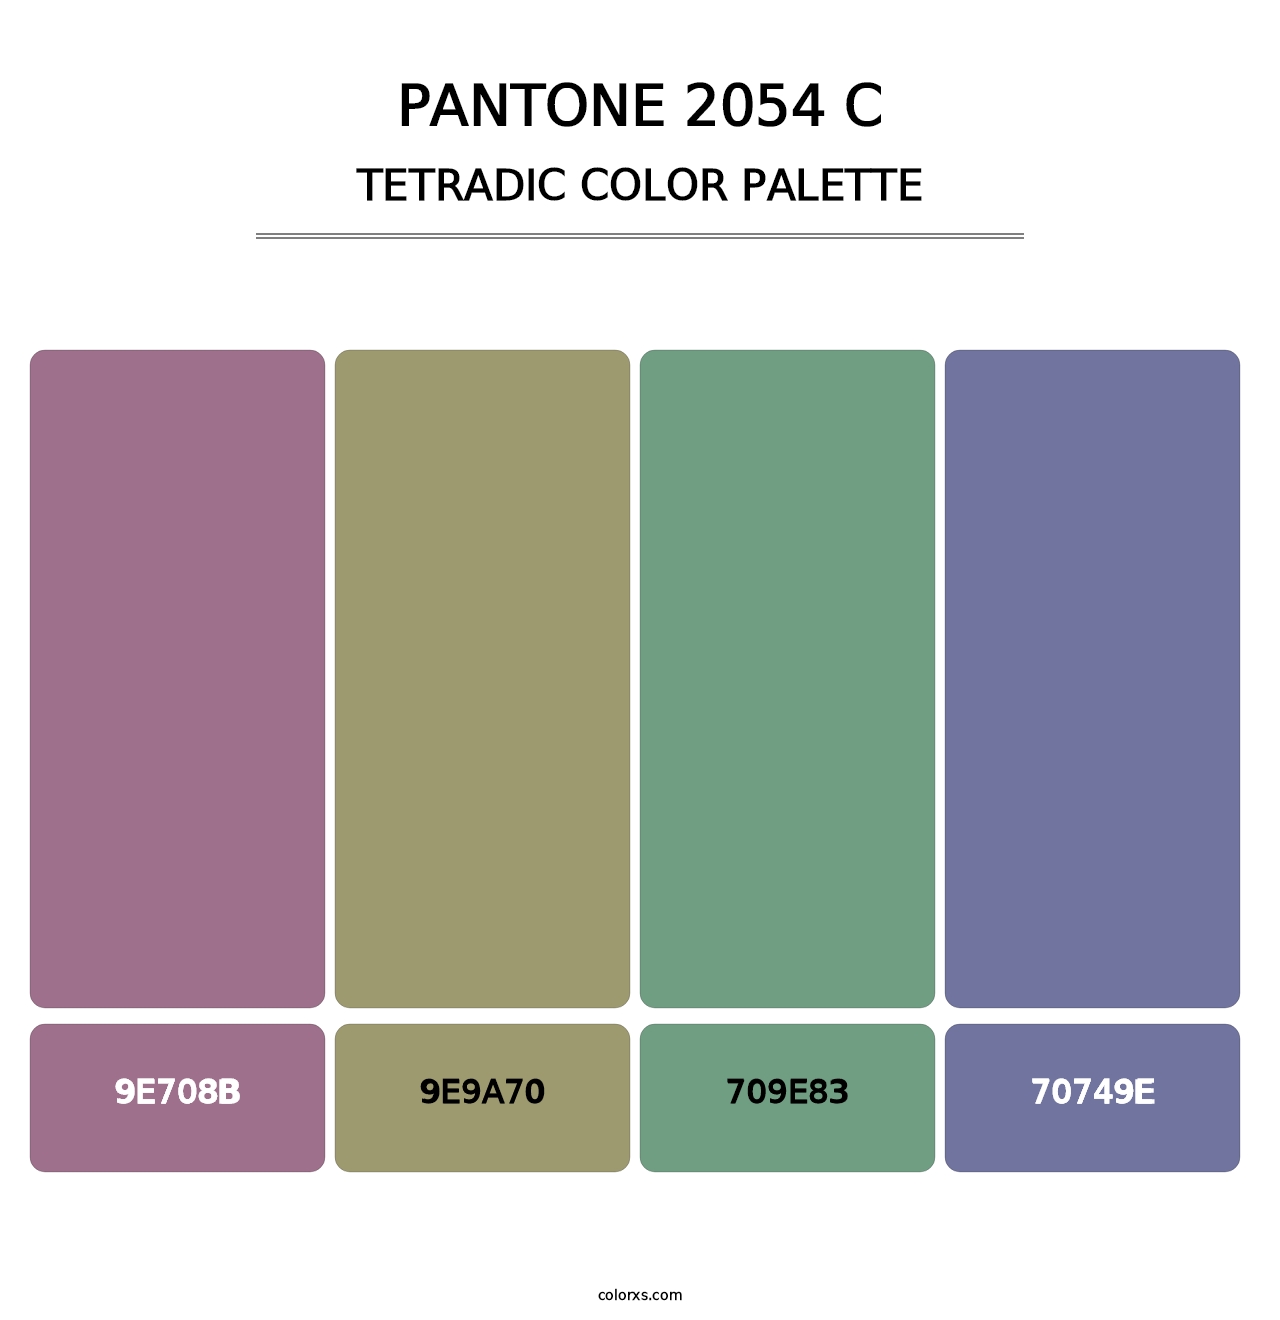 PANTONE 2054 C - Tetradic Color Palette